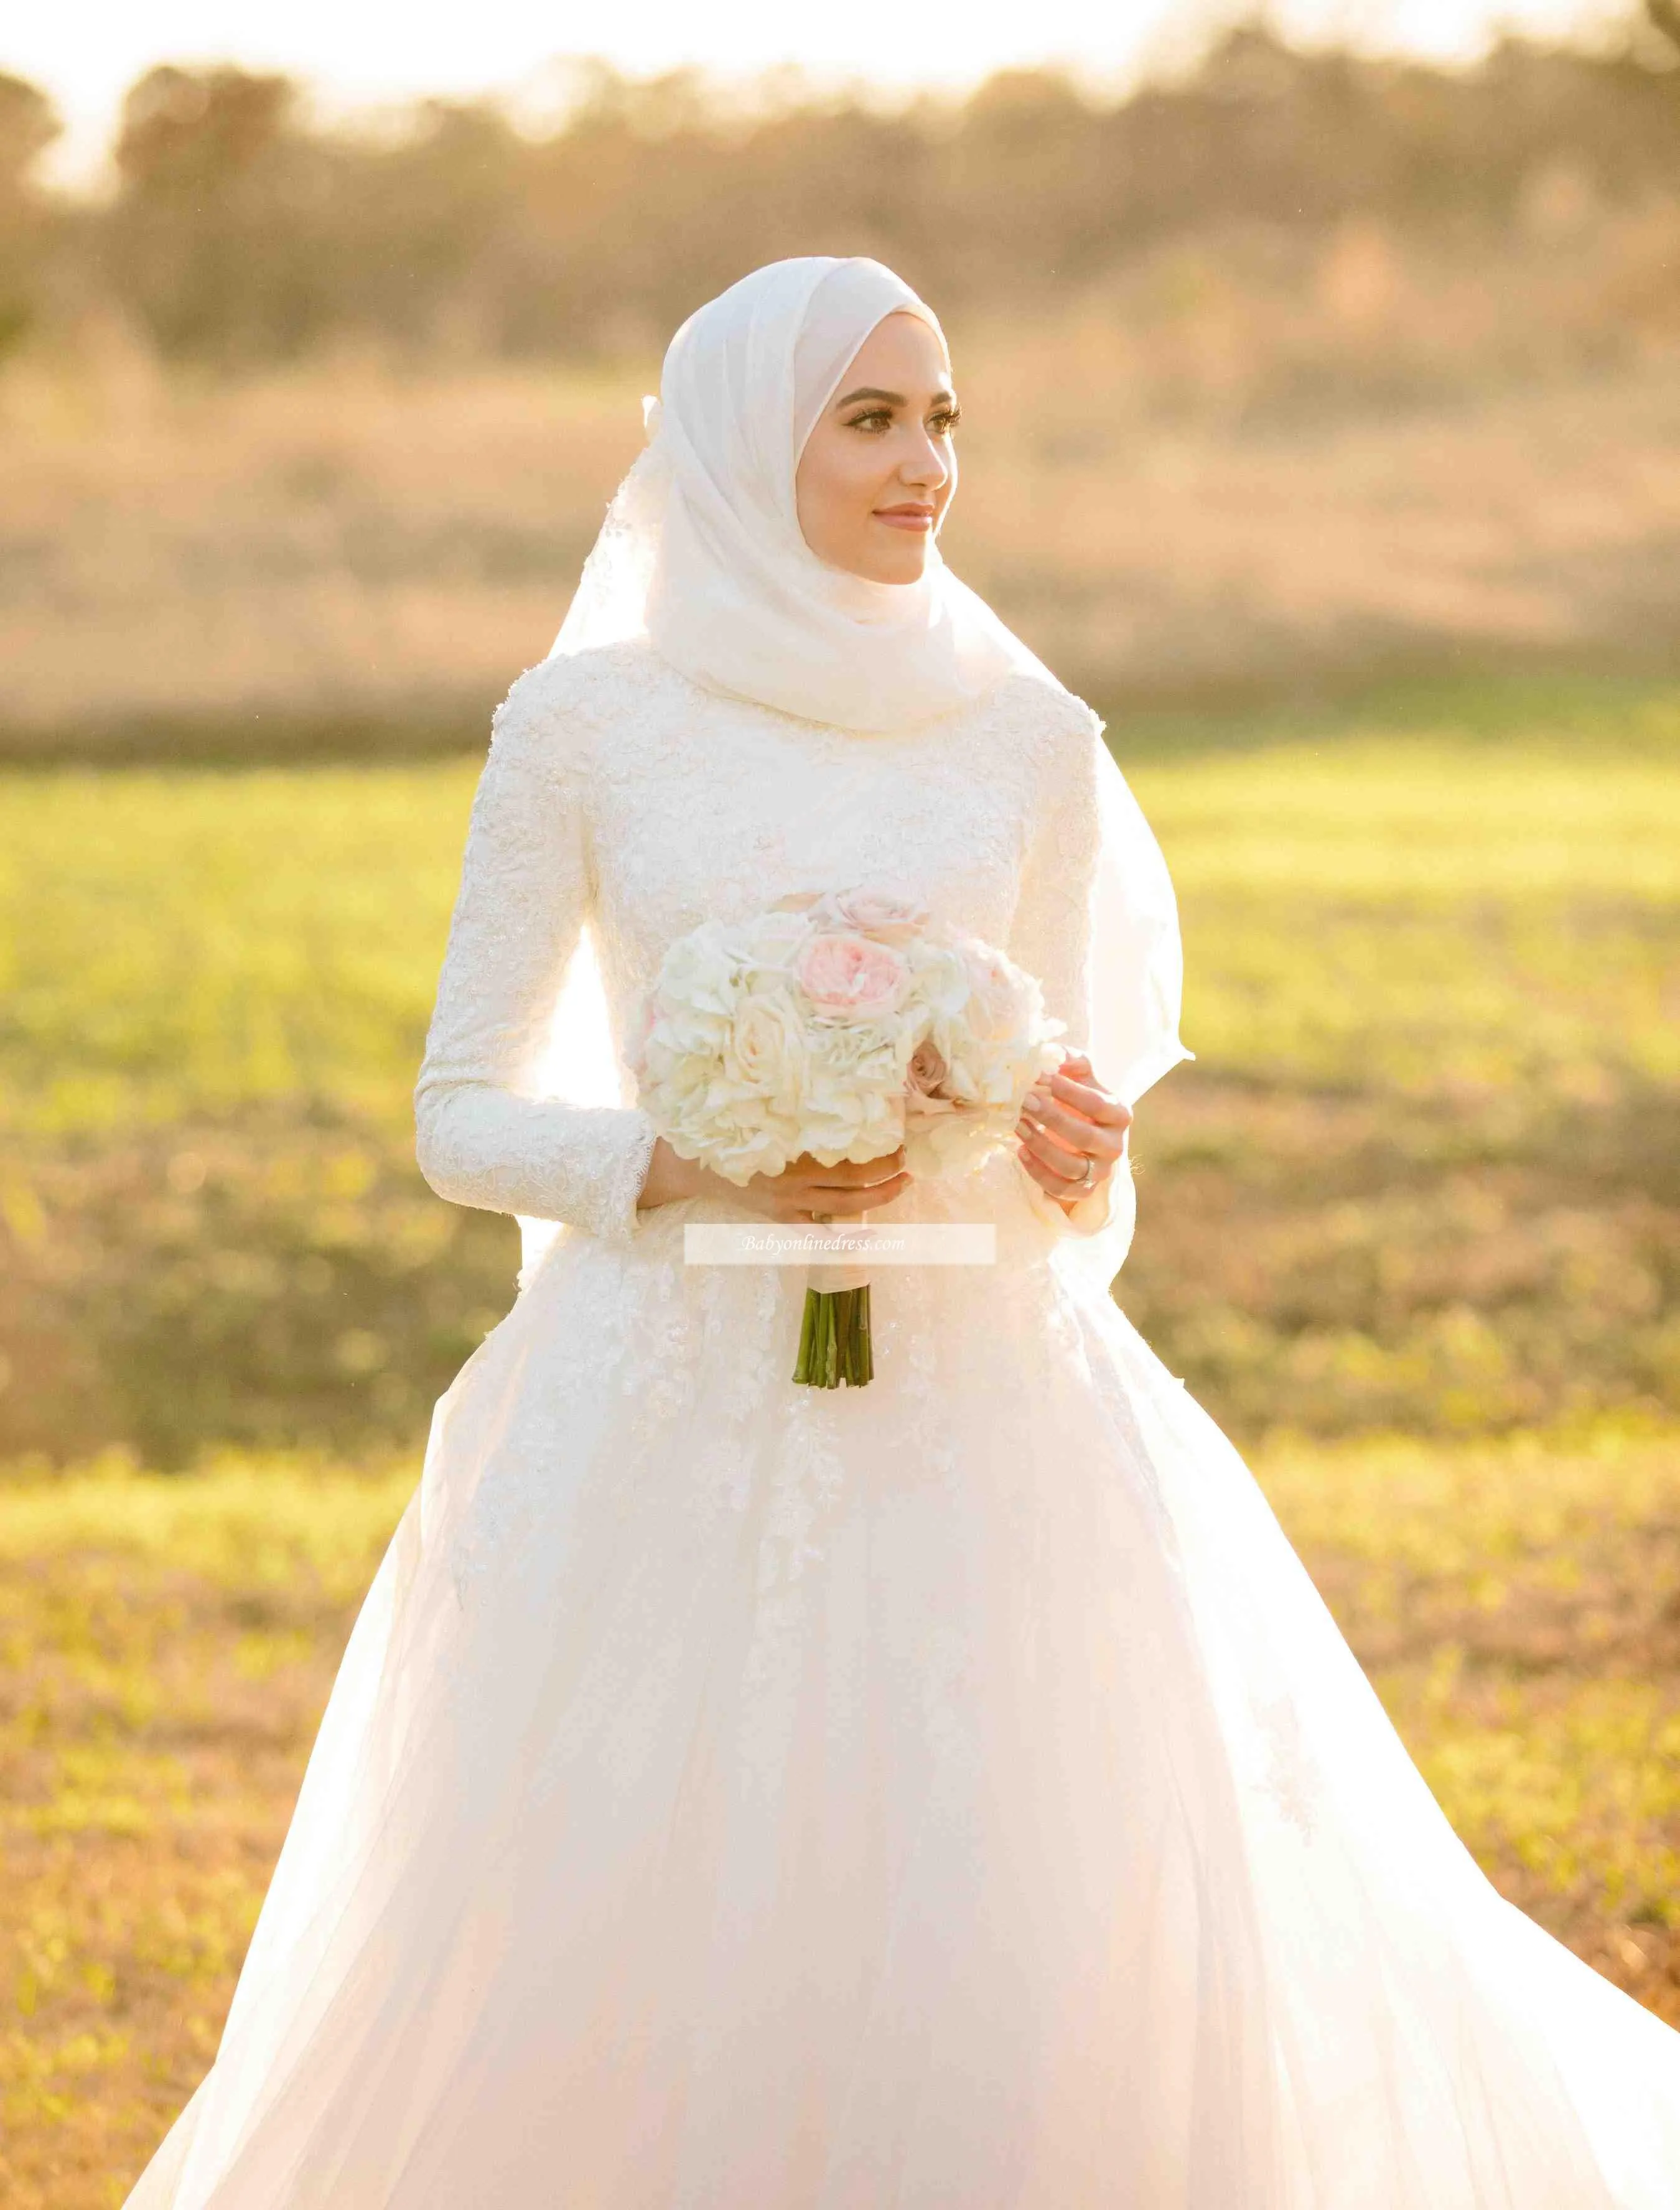 Nova chegada vestido de noiva muçulmano árabe Aline High Neck Tulle Mangas compridas Jardim country Garden Bridal Vestido personalizado feito plus size1966860